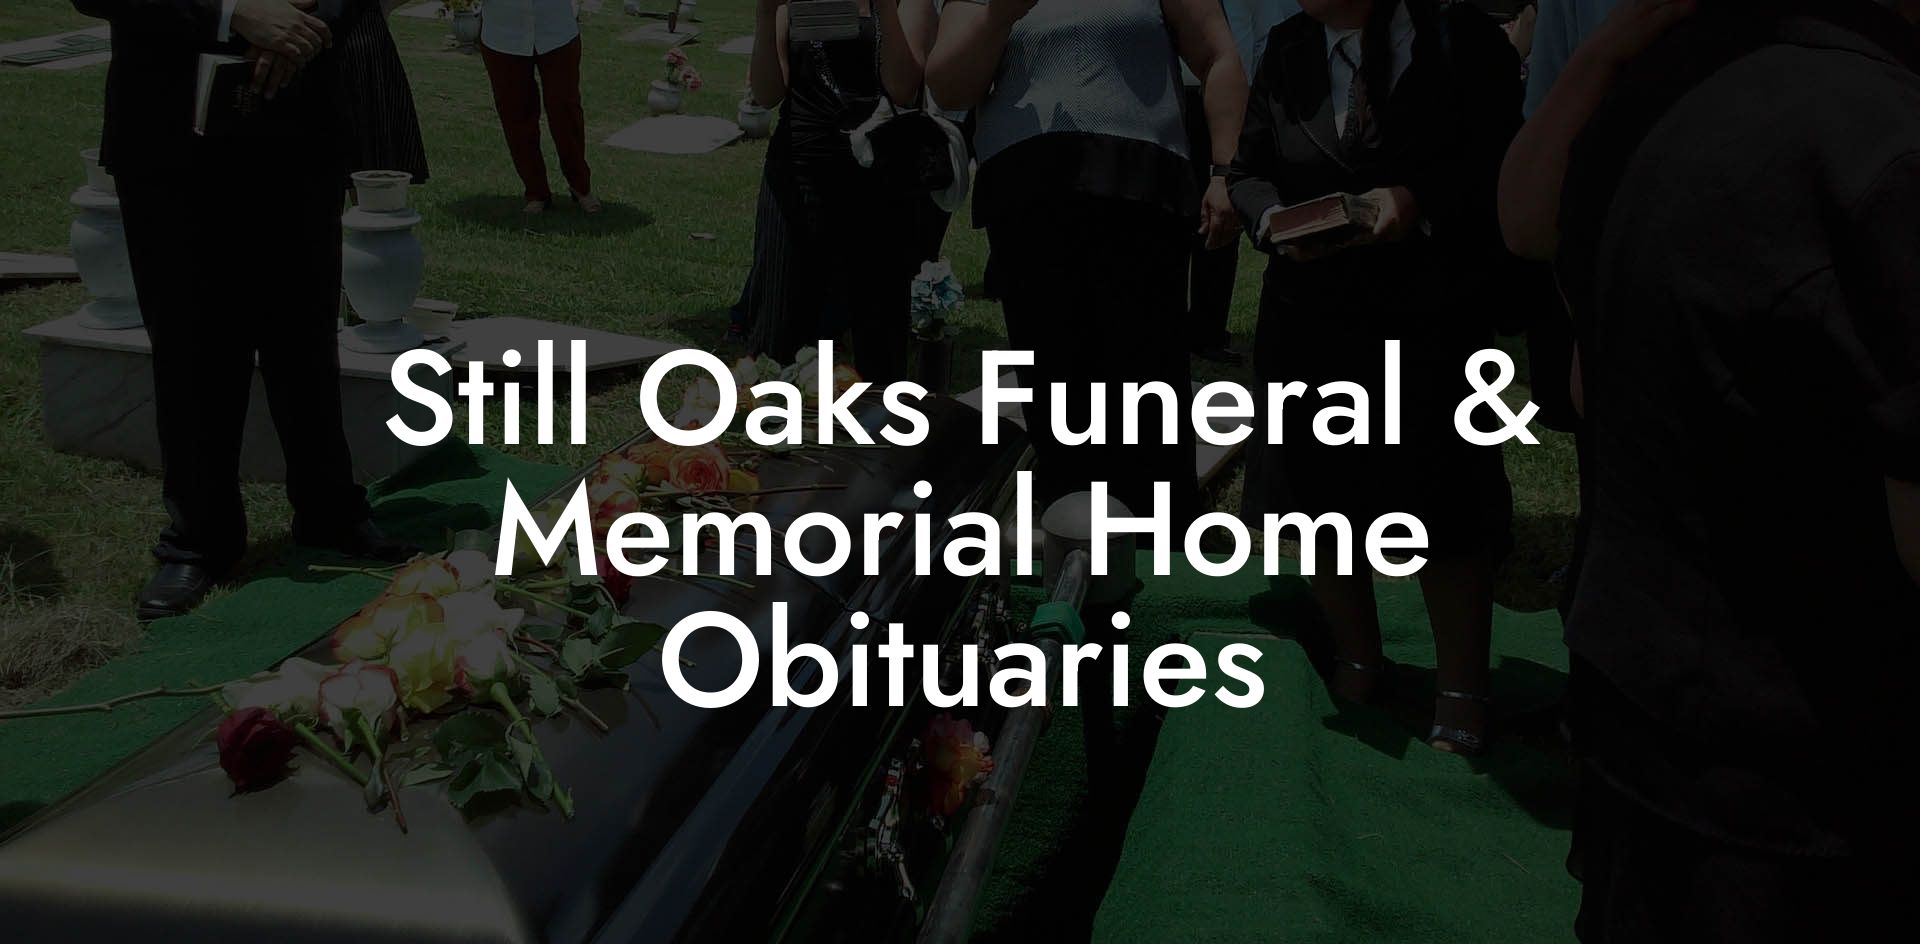 Still Oaks Funeral & Memorial Home Obituaries